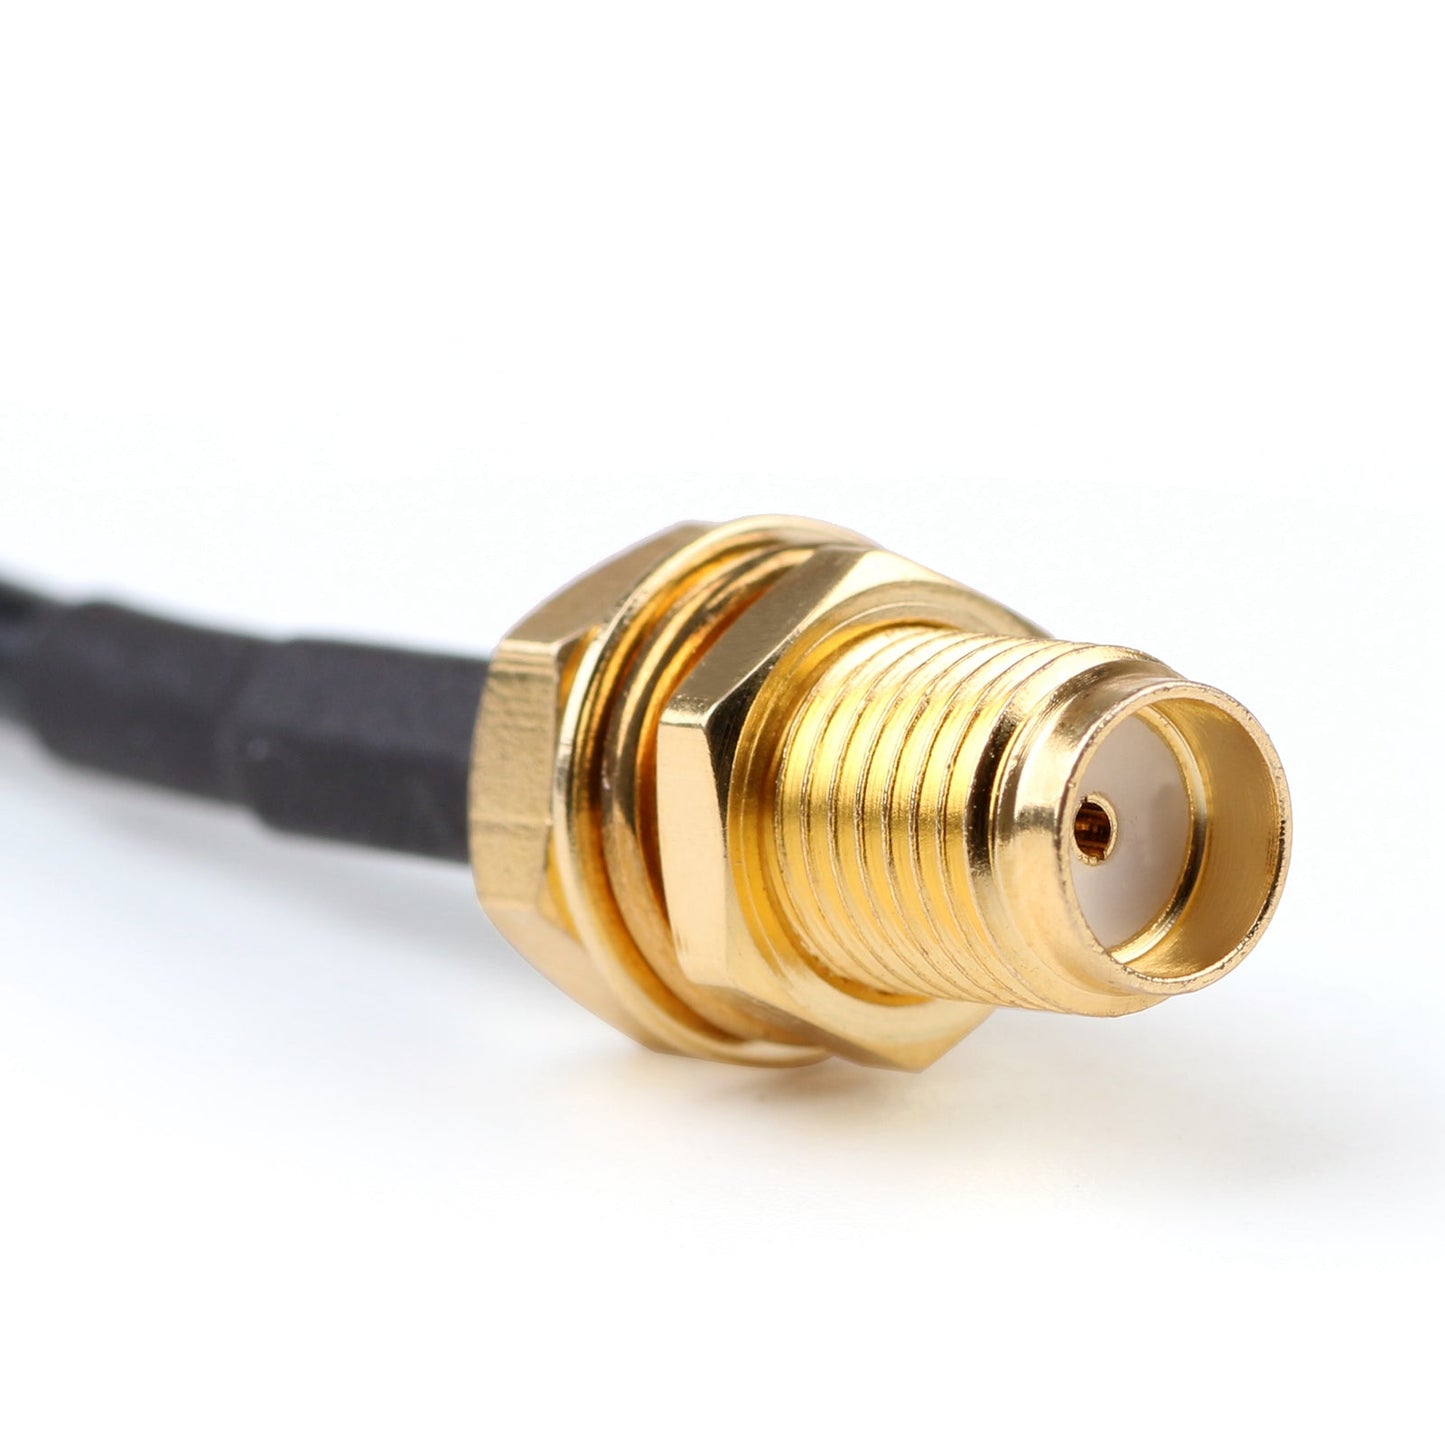 5m RG174 Cable SMA Male Plug To SMA Female Jack Bulkhead Coax Pigtail 16ft